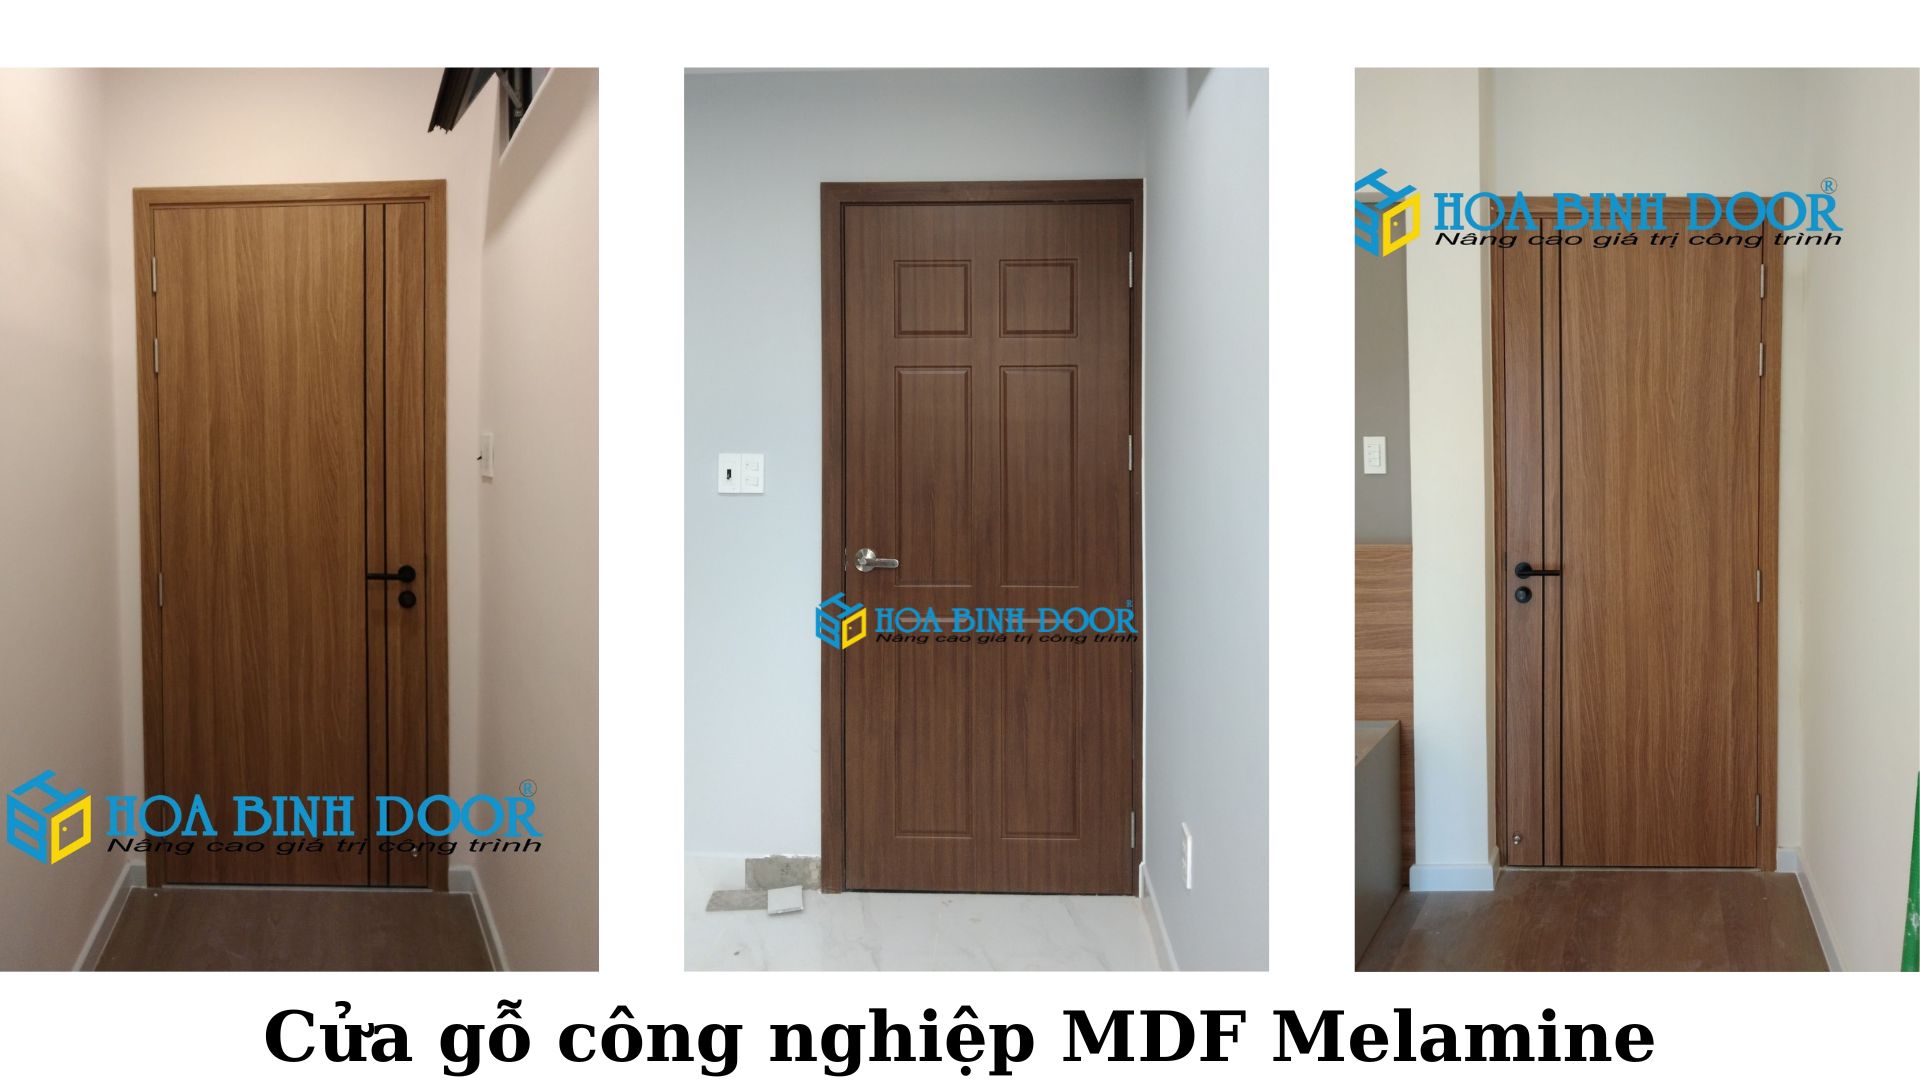 Cua-go-cong-nghiep-MDF-Melamine-1.jpg